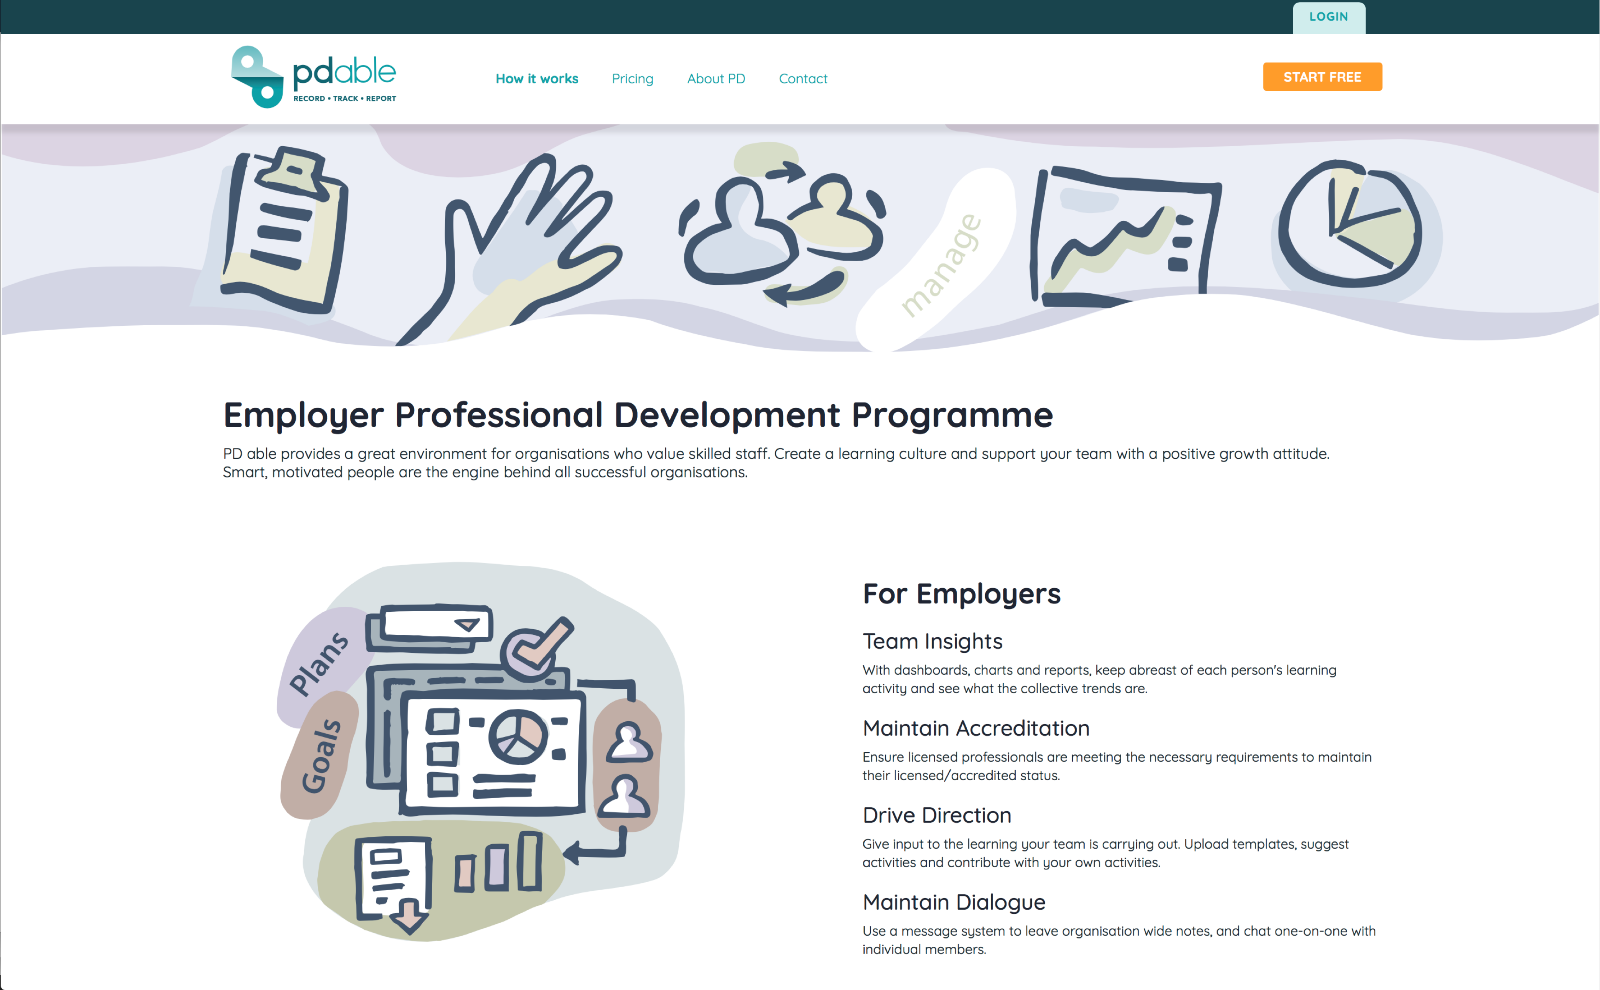 PD able - Employer Professional Development Programme